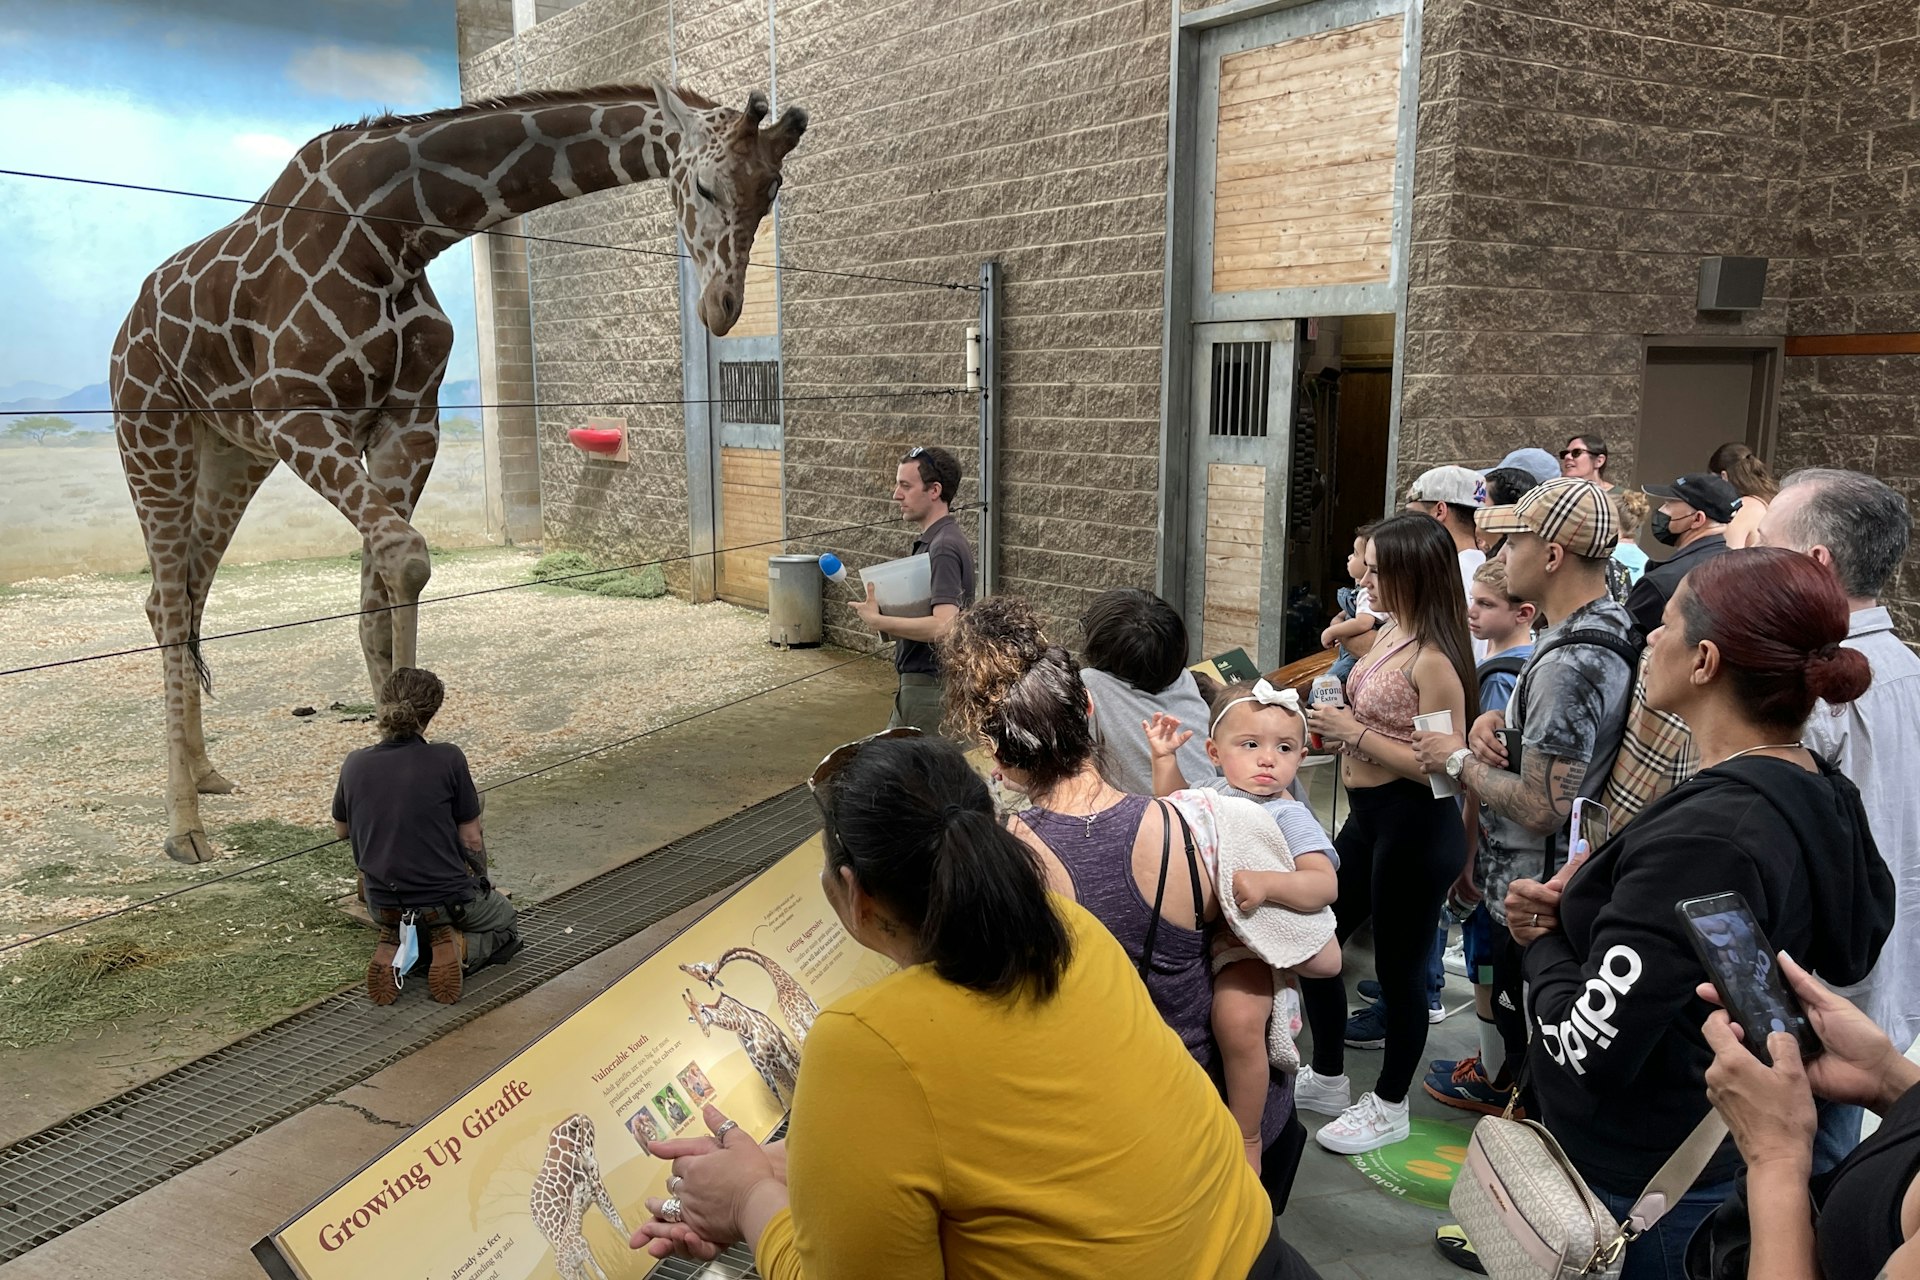 People visit a giraffe at the Bronx Zoo, the Bronx, New York City, New York, USA